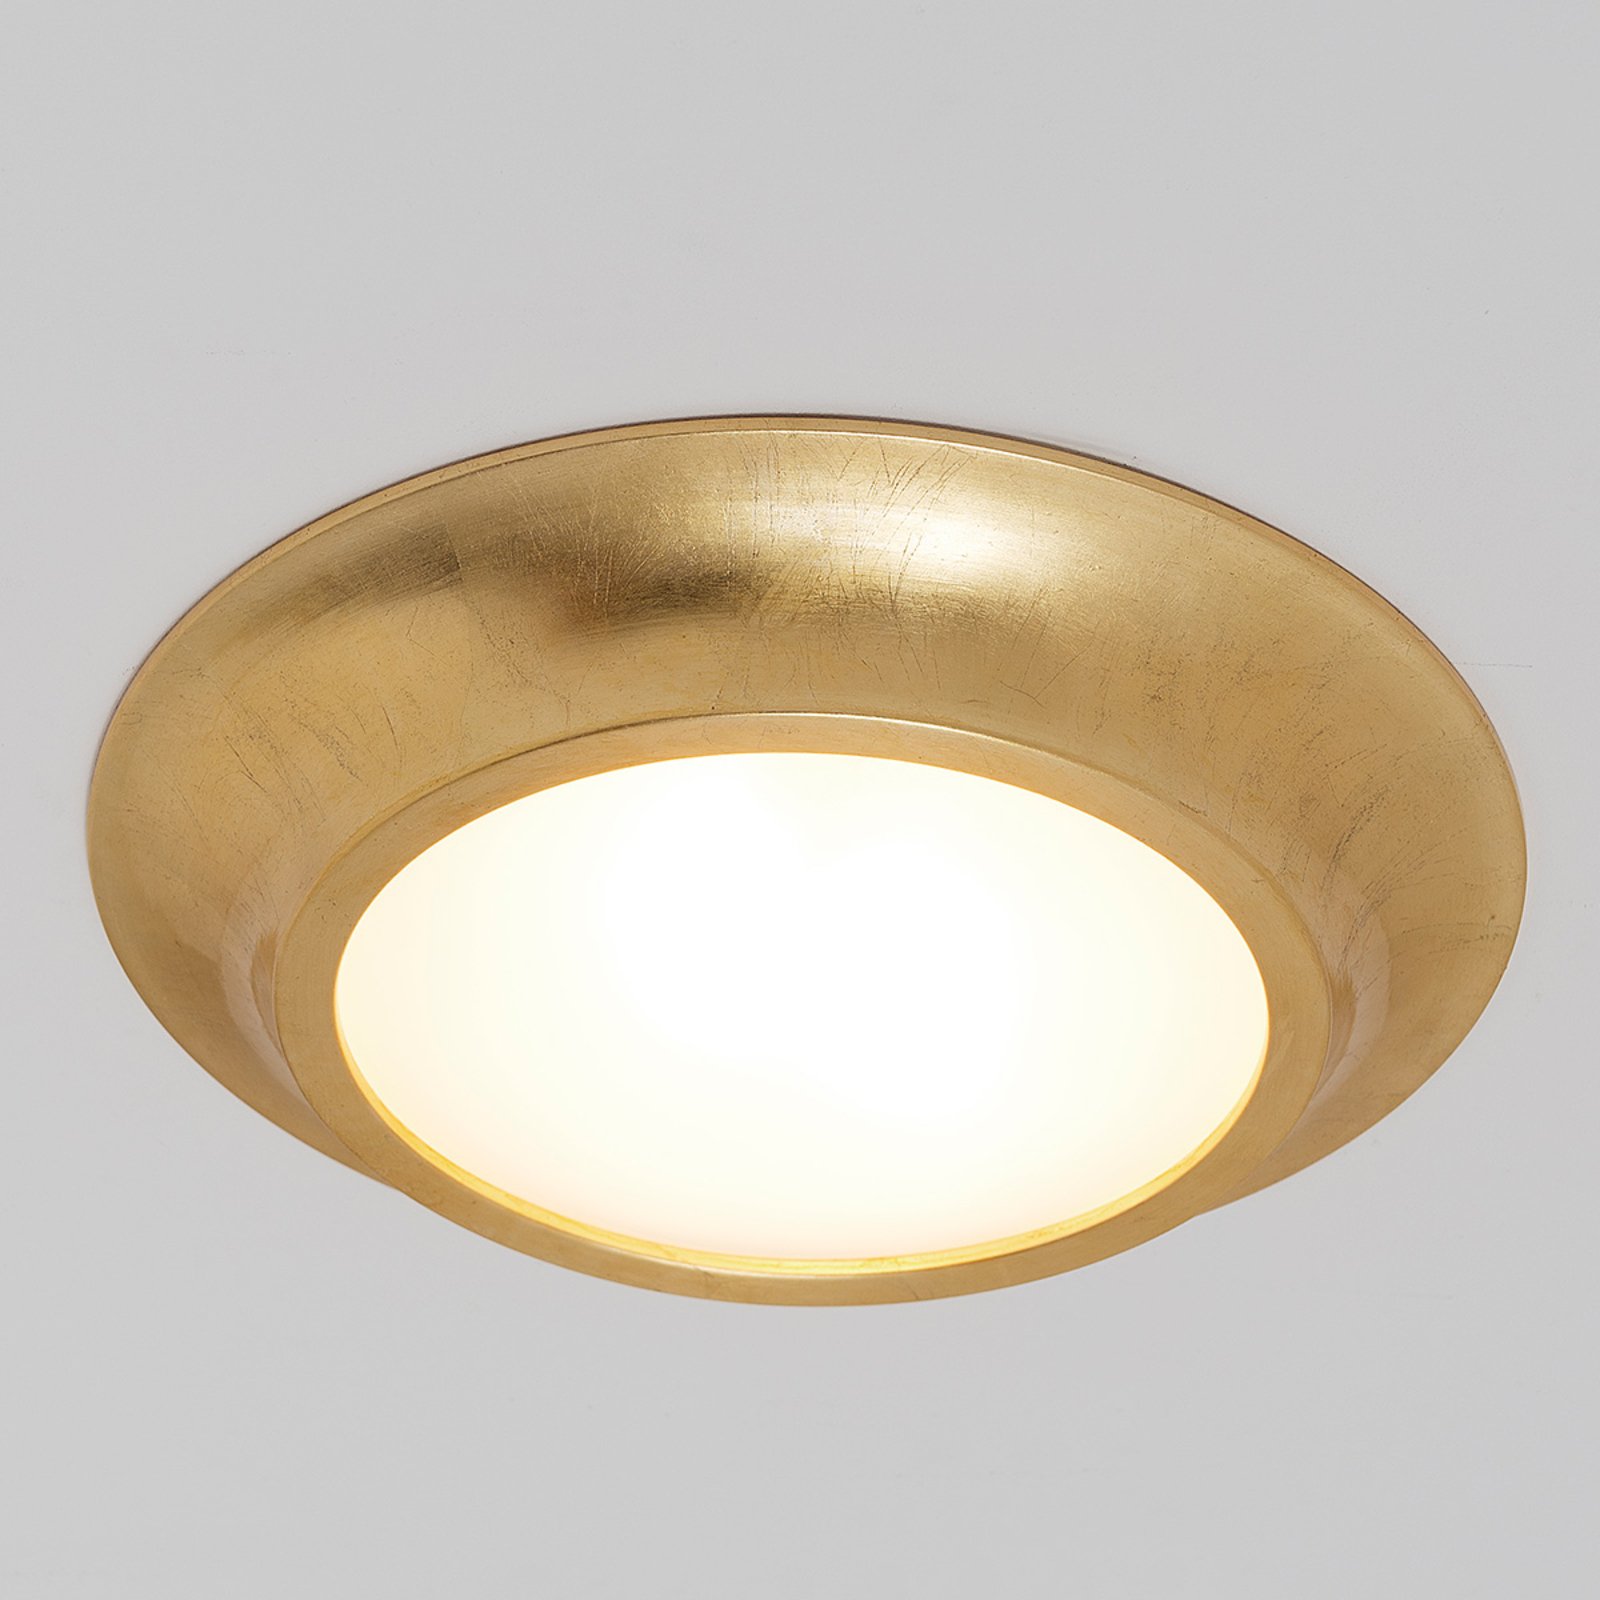 Gouden keramische plafondlamp Spettacolo